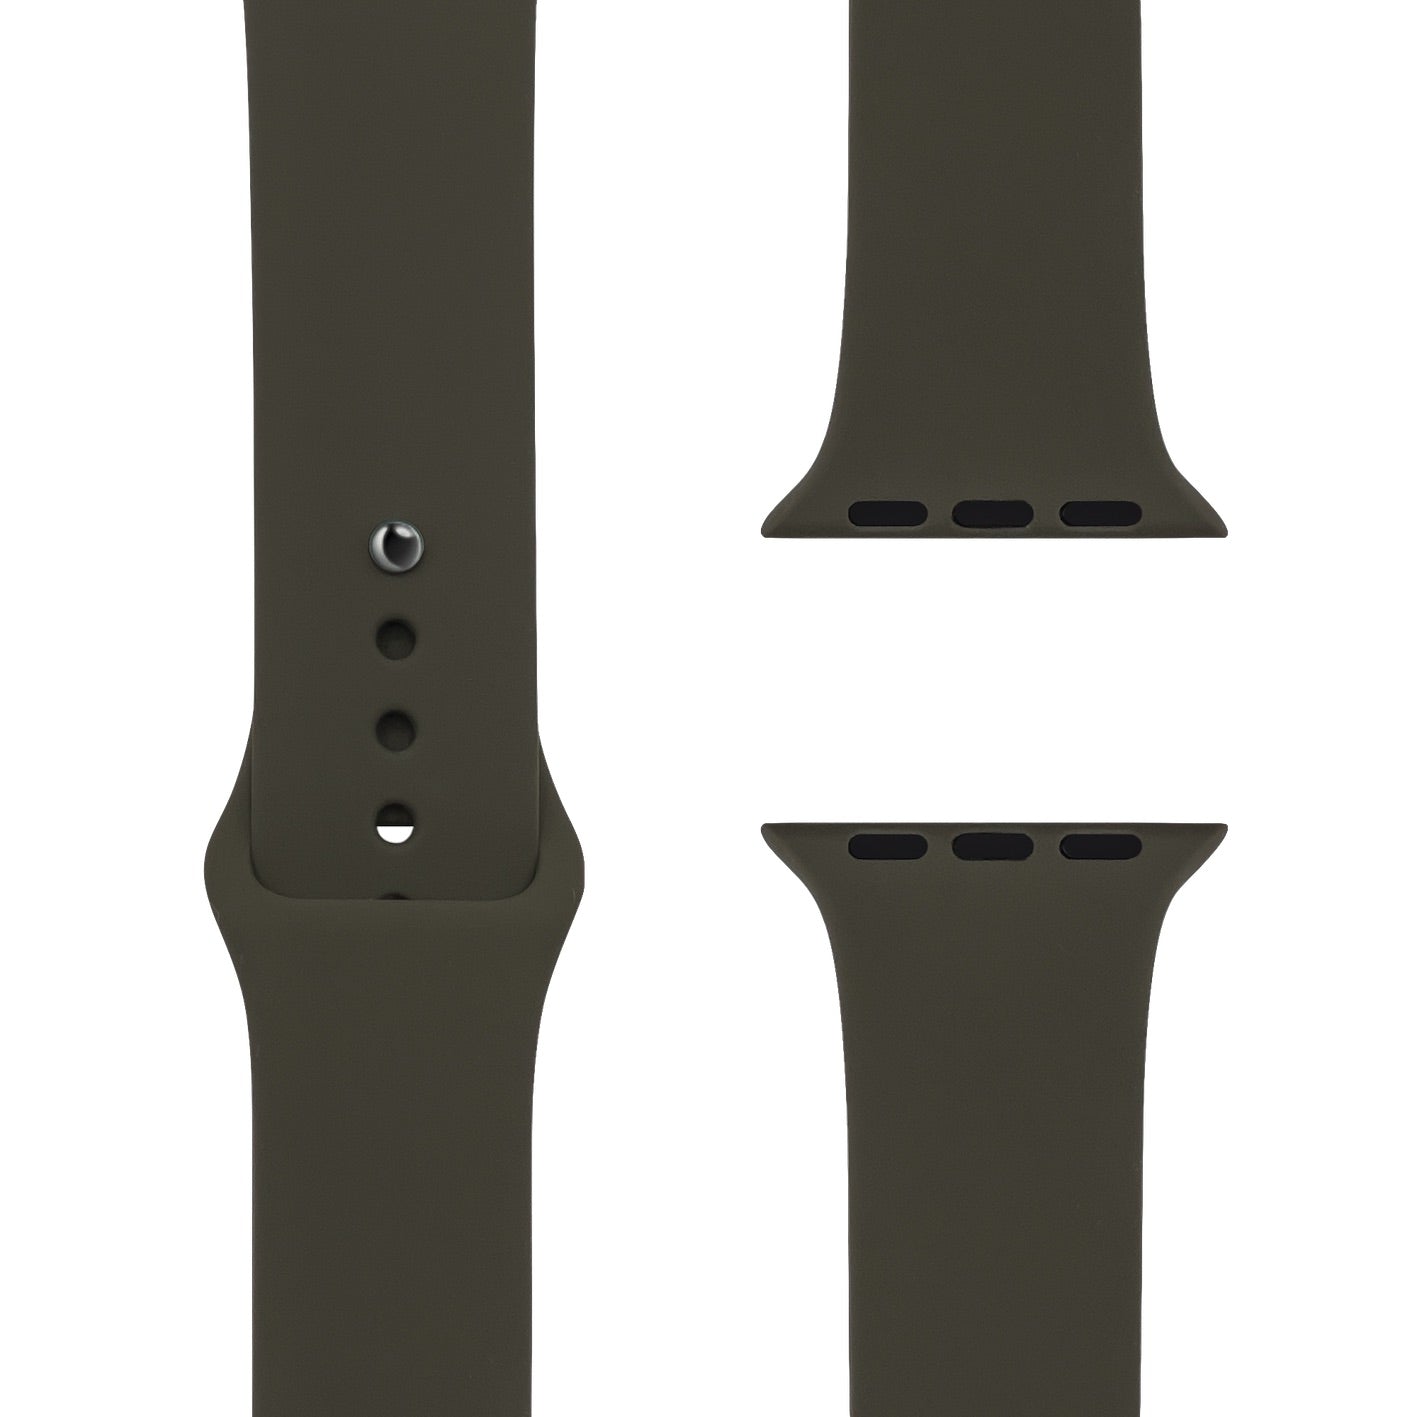 Dark Olive Silikon Loop | Sportarmband für Apple Watch (Grün)-Apple Watch Armbänder kaufen